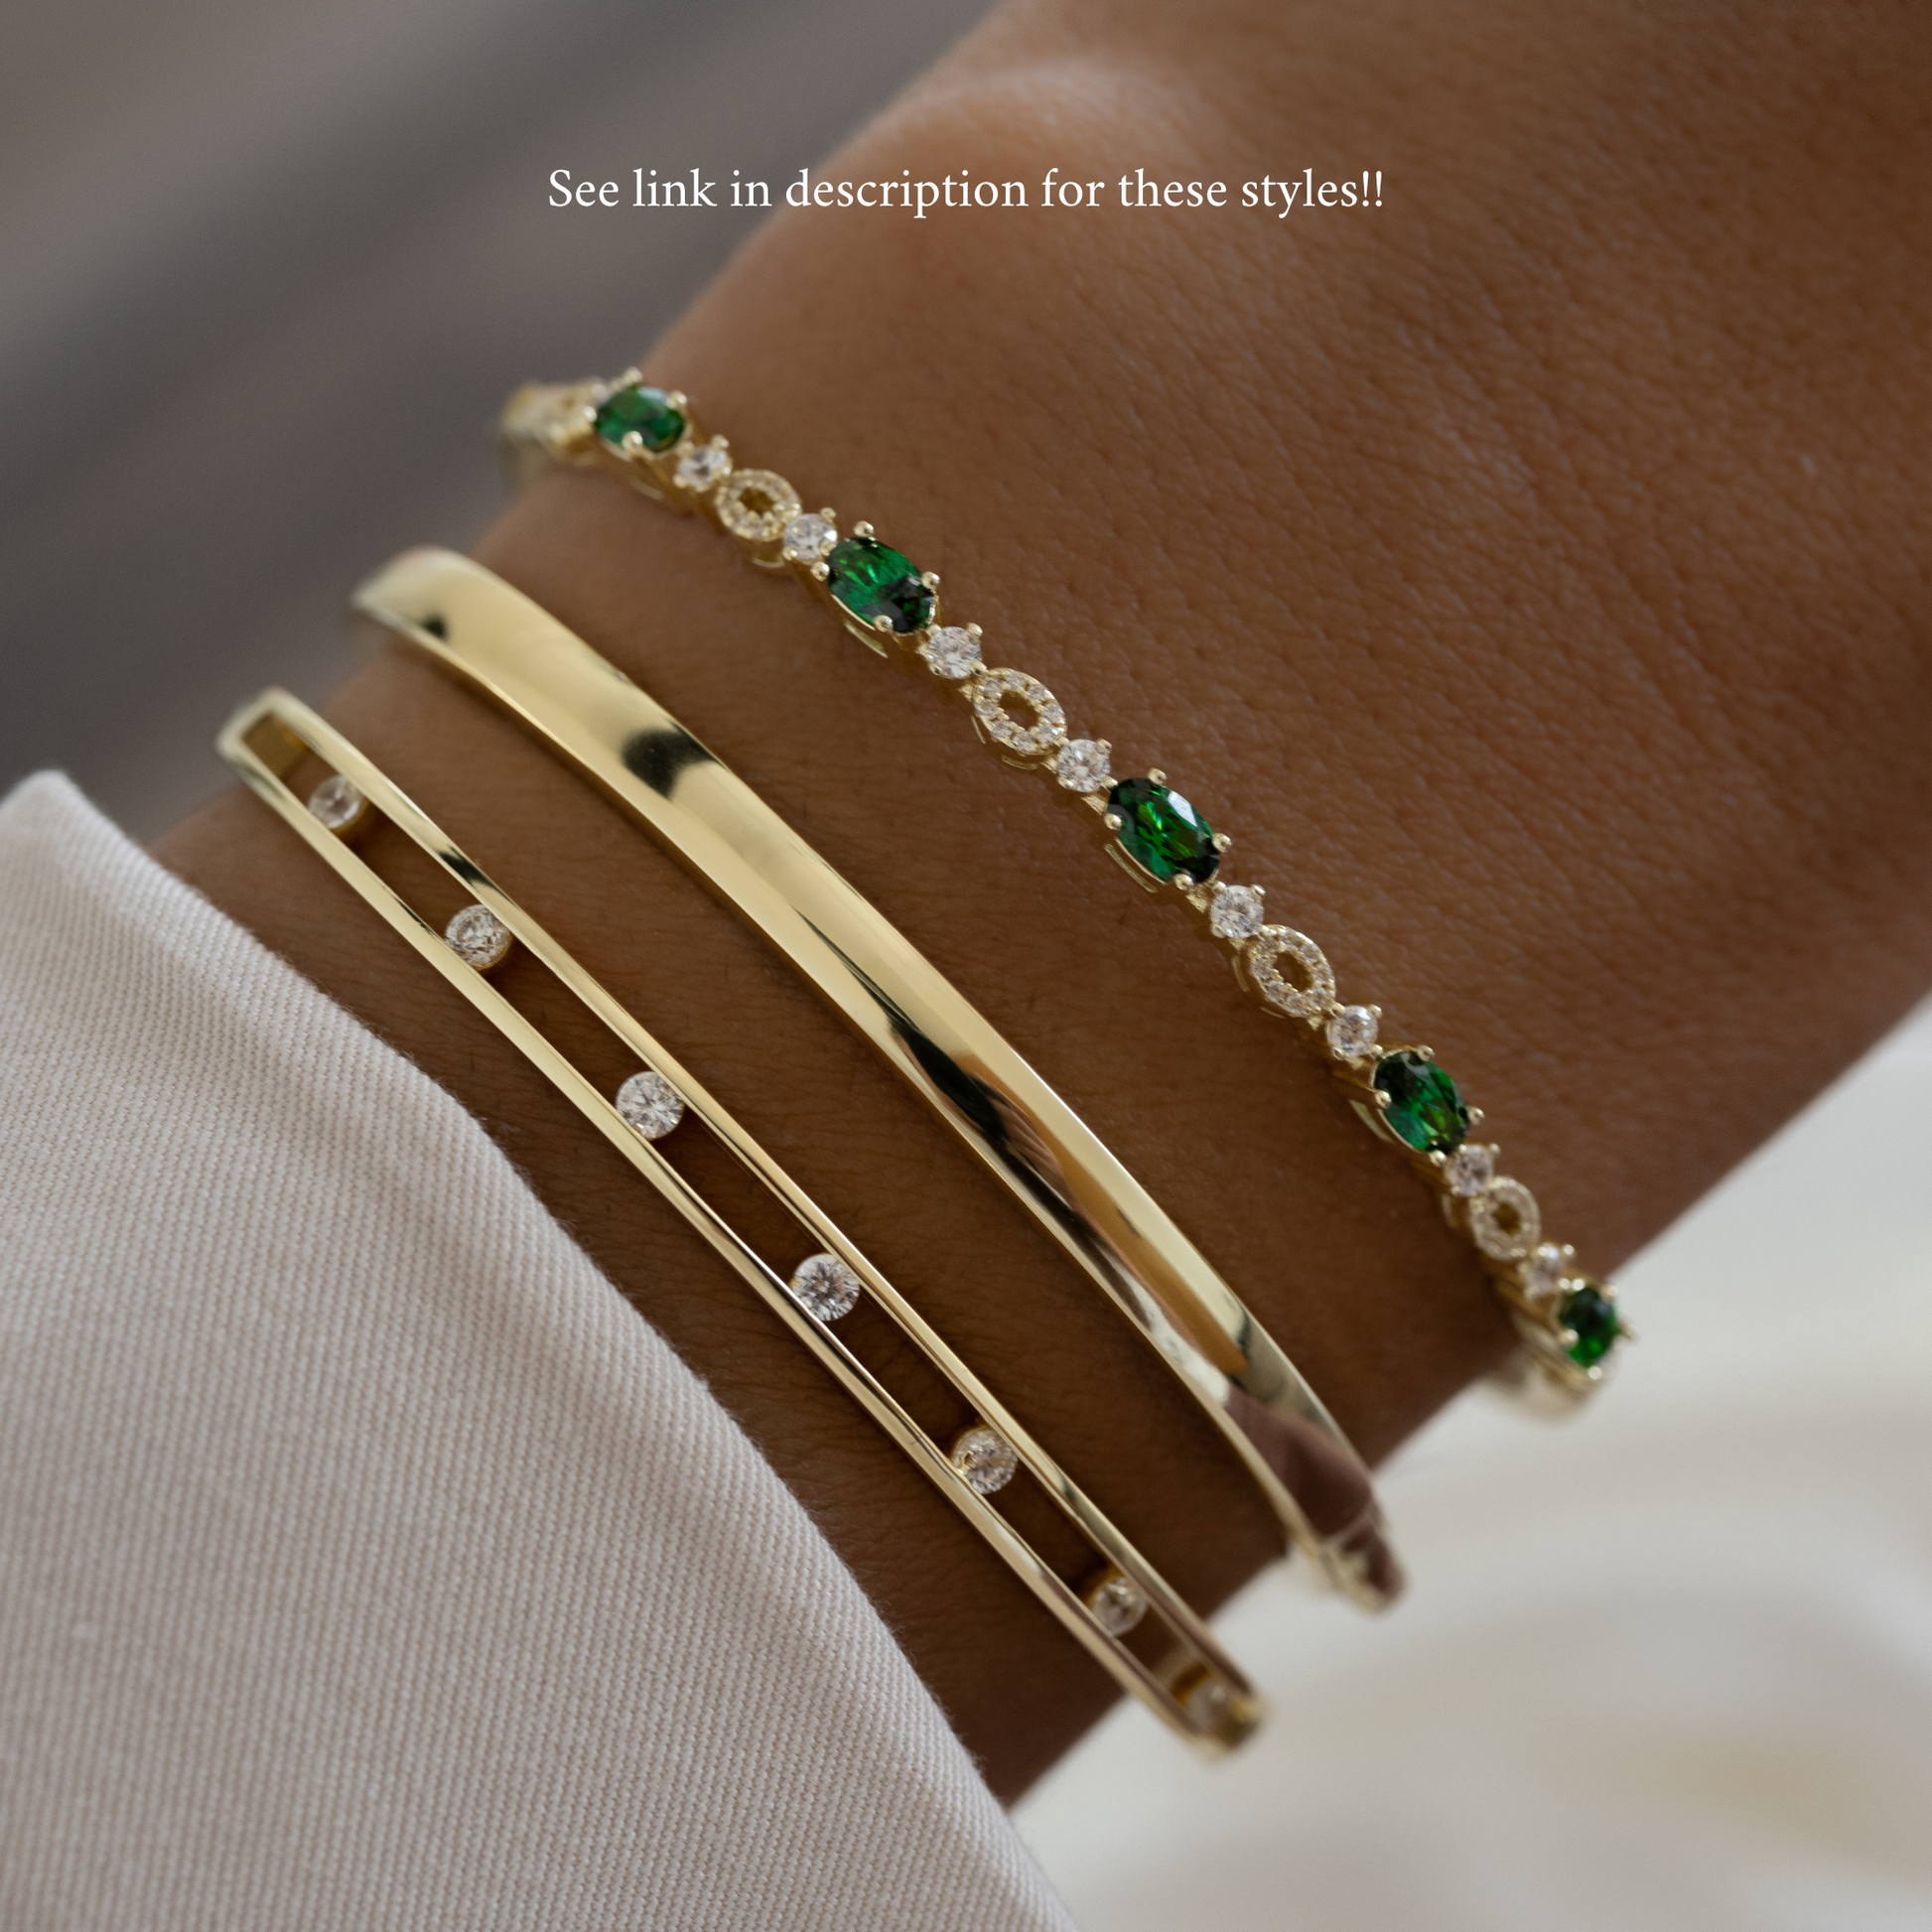 three bangle bracelets stacked together consisting of an emerald bangle a solid bangle and a diamond studded bangle